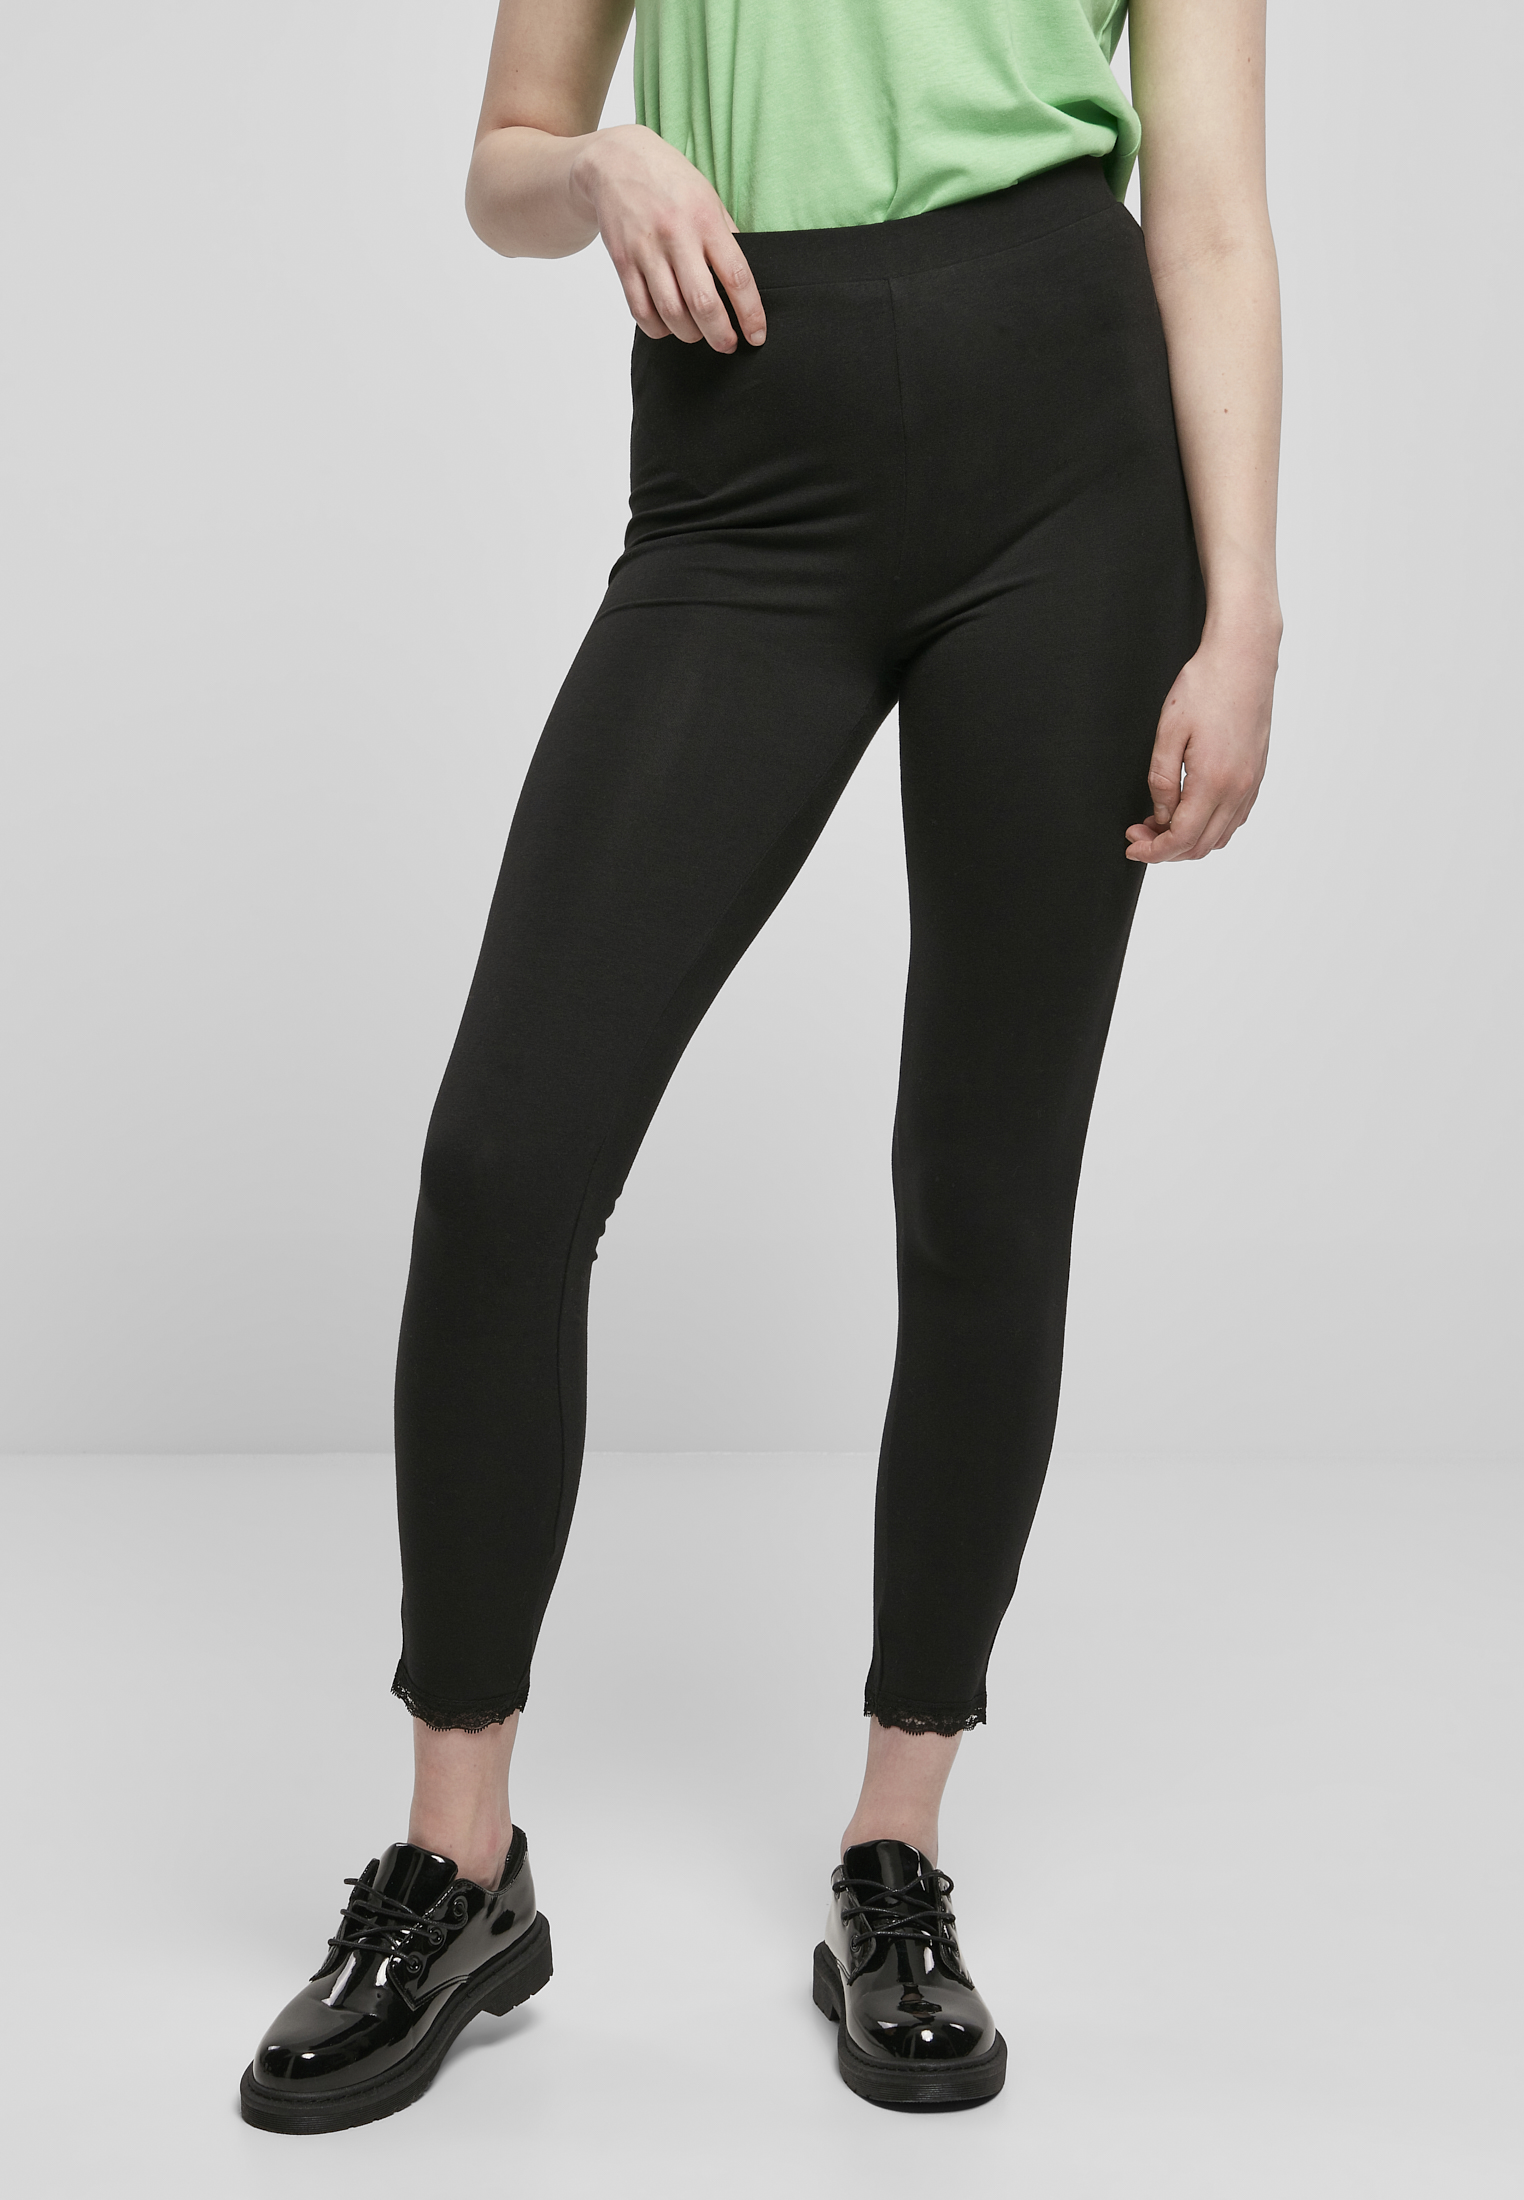 Women's leggings with lace trim black